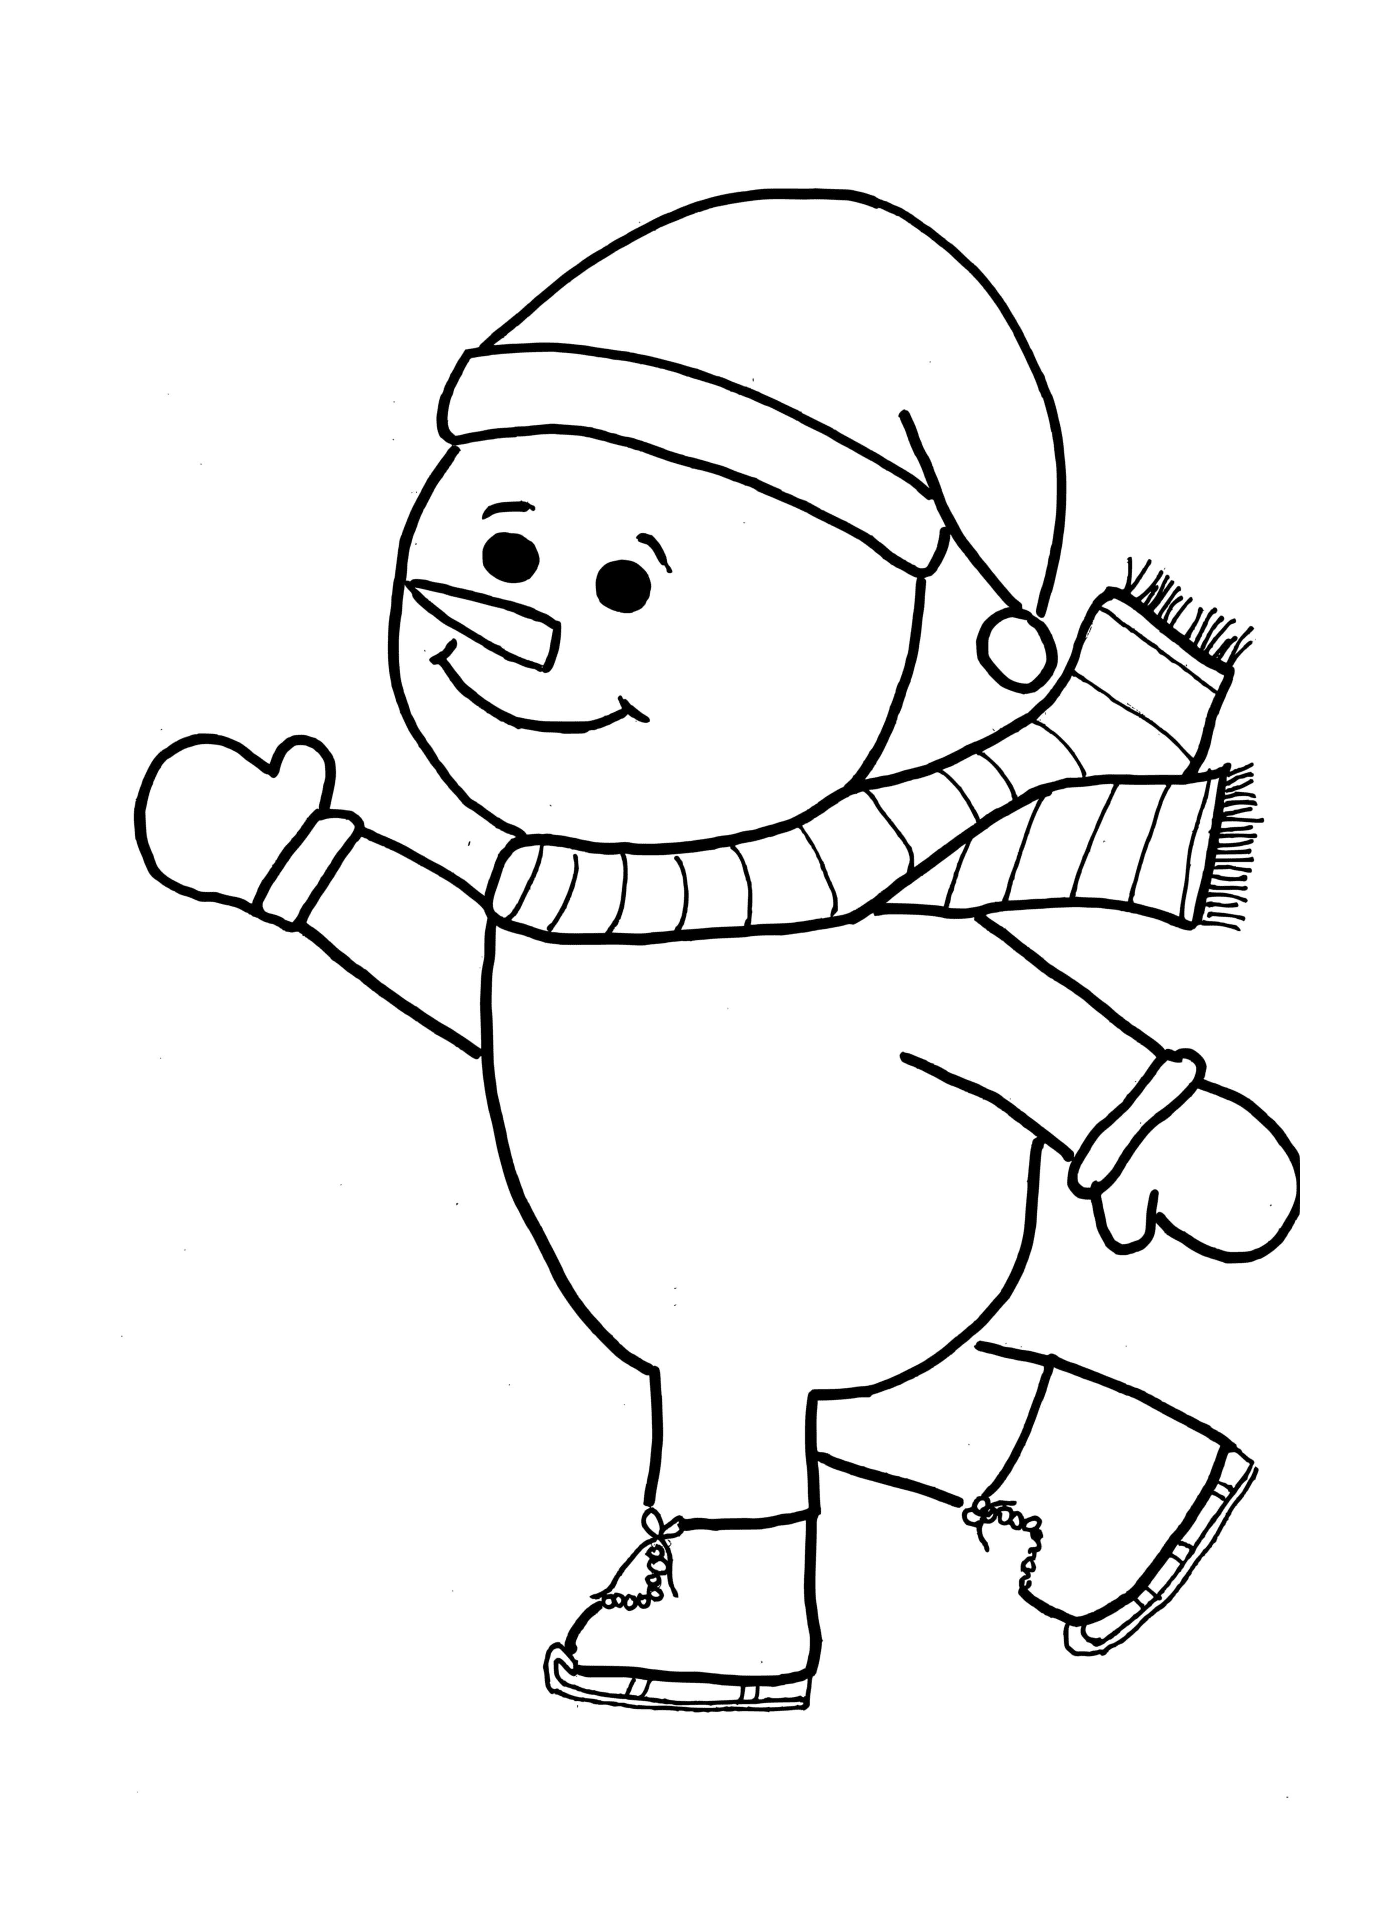  A snowman skating on Christmas Day 